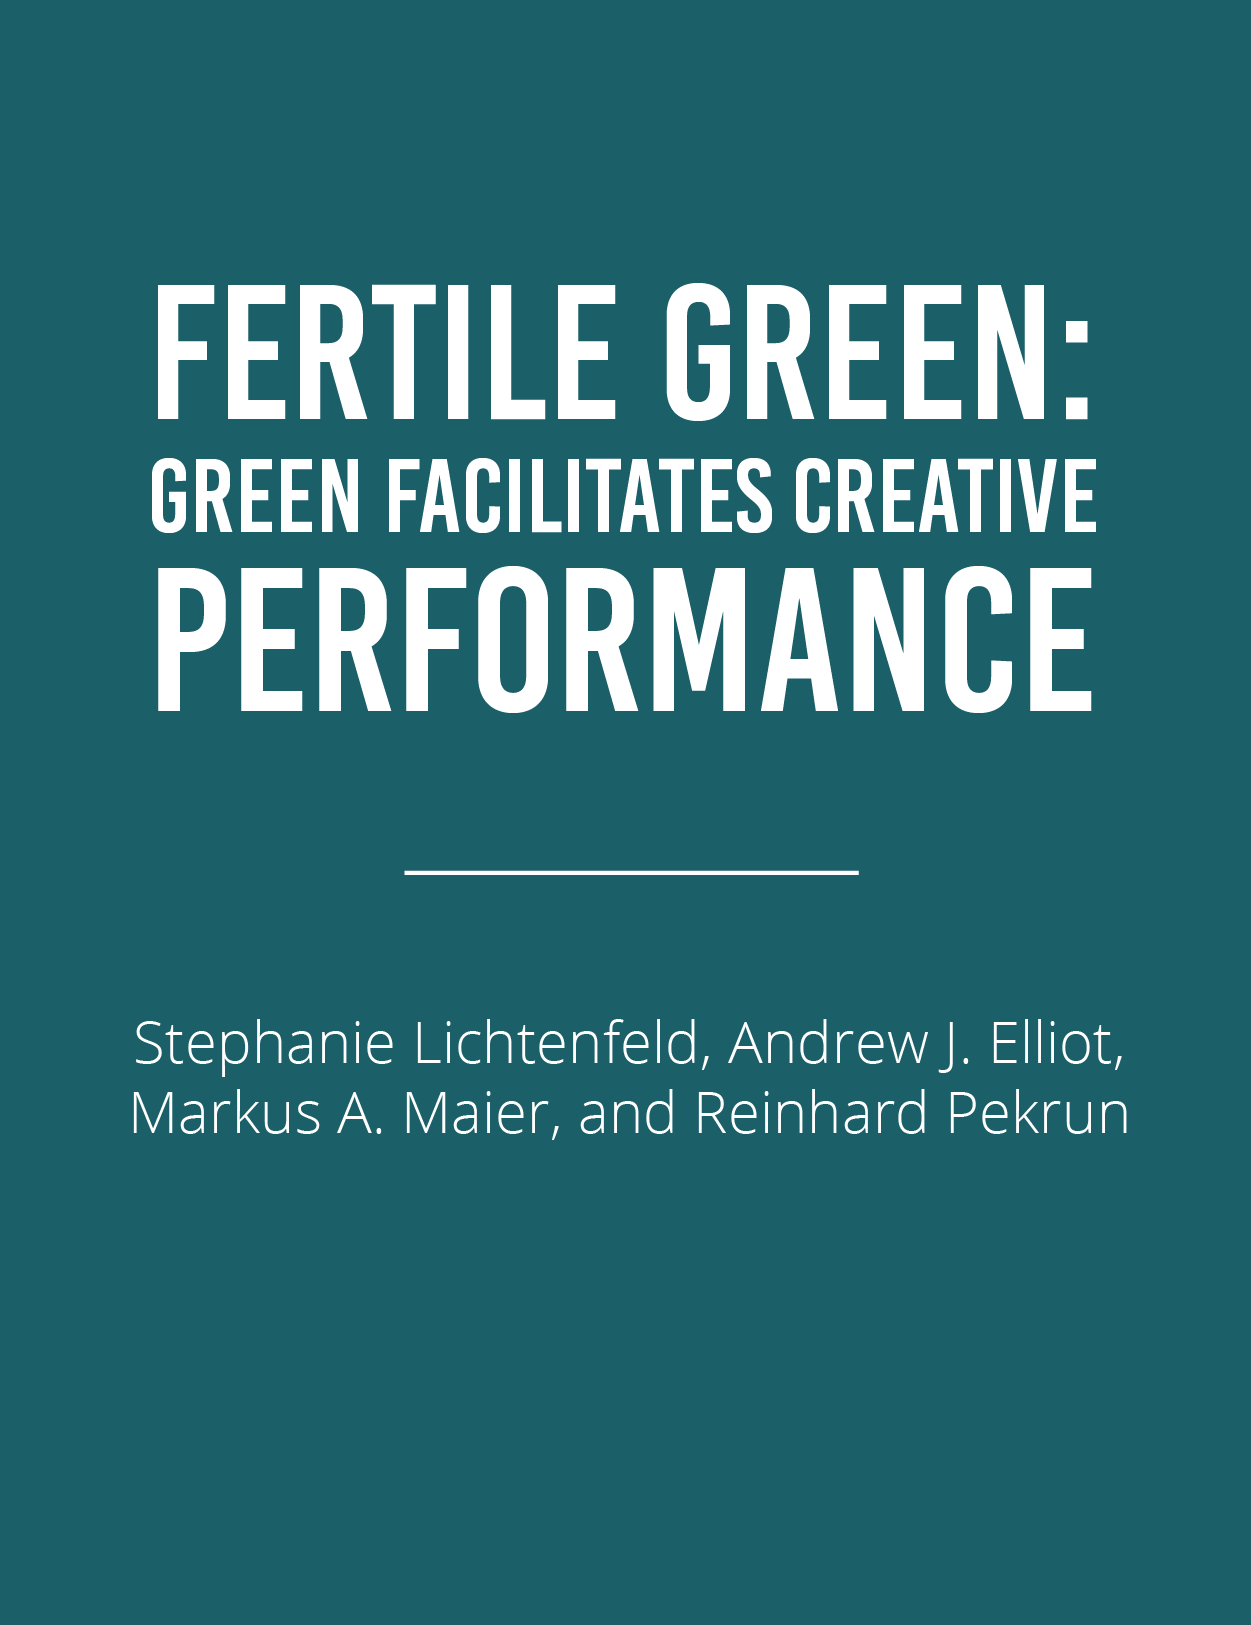 Green Facilitates Creative PerformanceFeatured Image